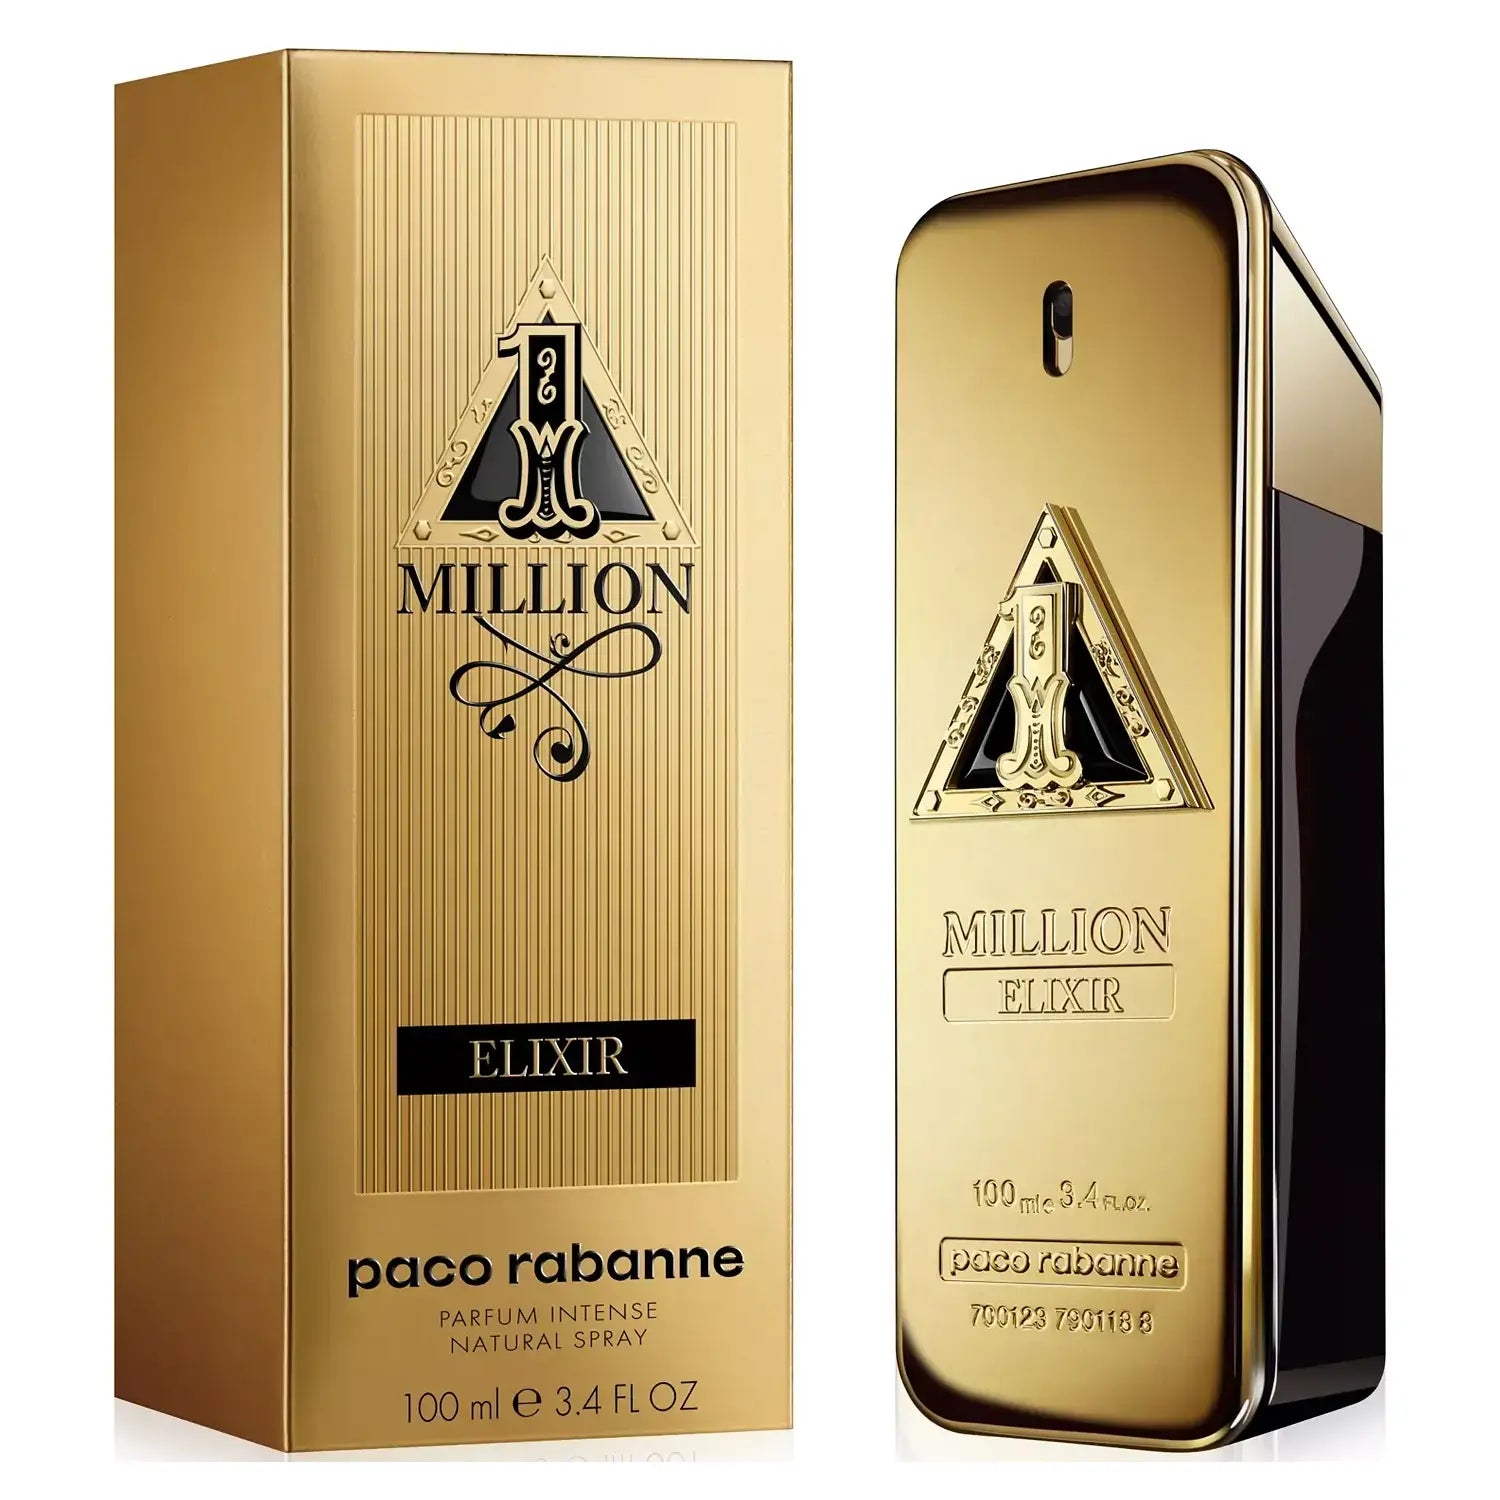 1 Million Elixir by Paco Rabanne 3.4 oz Parfum Intense Spray for Men